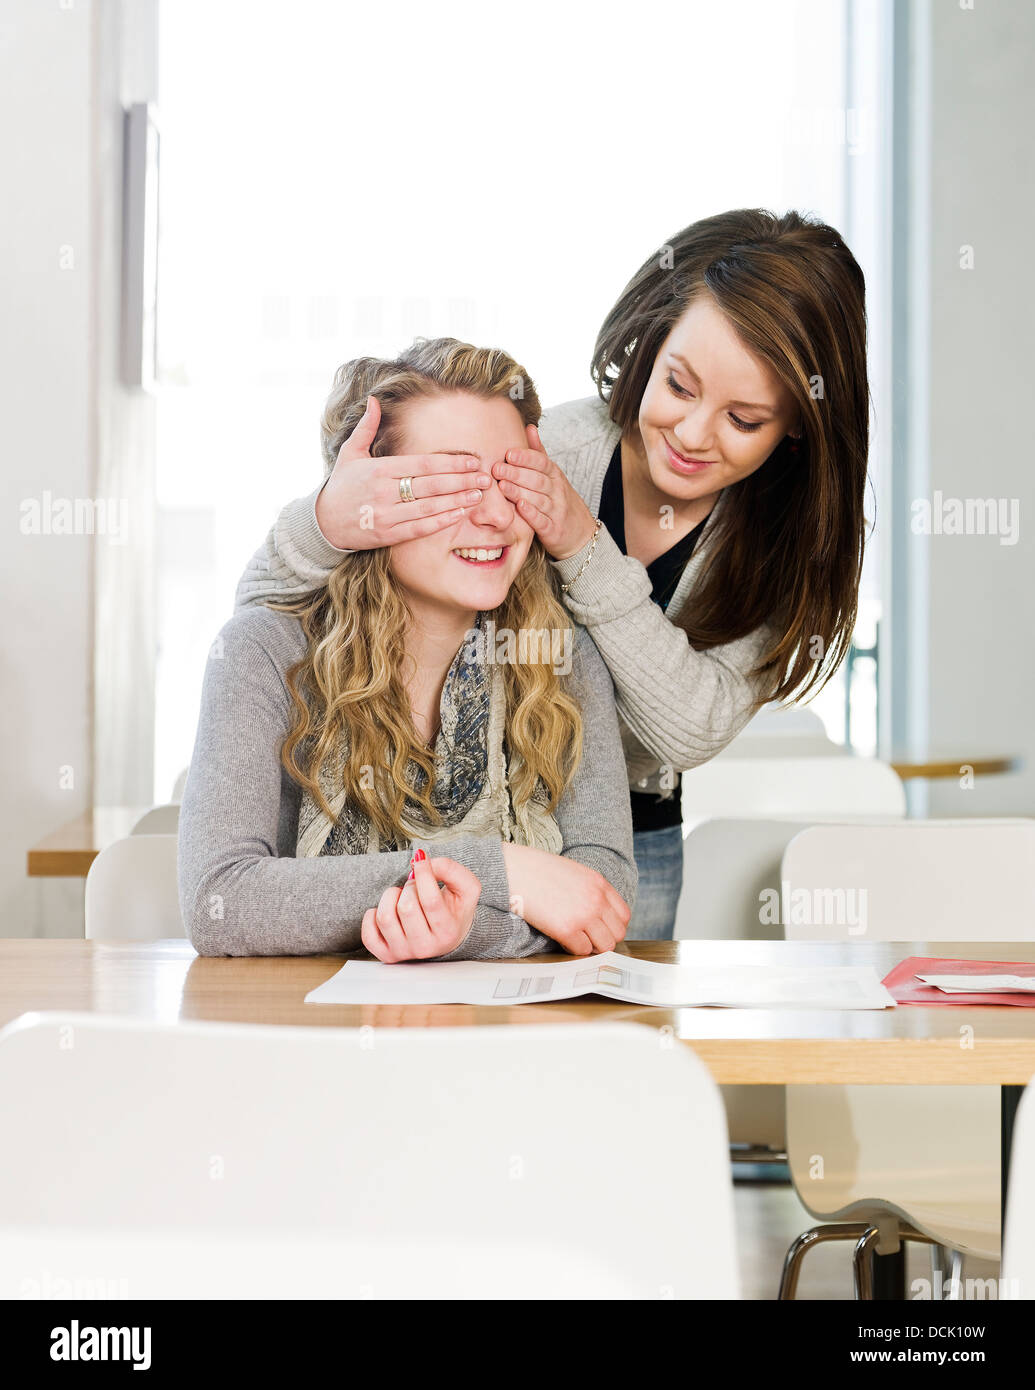 two girls playing peek a boo Stock Photo